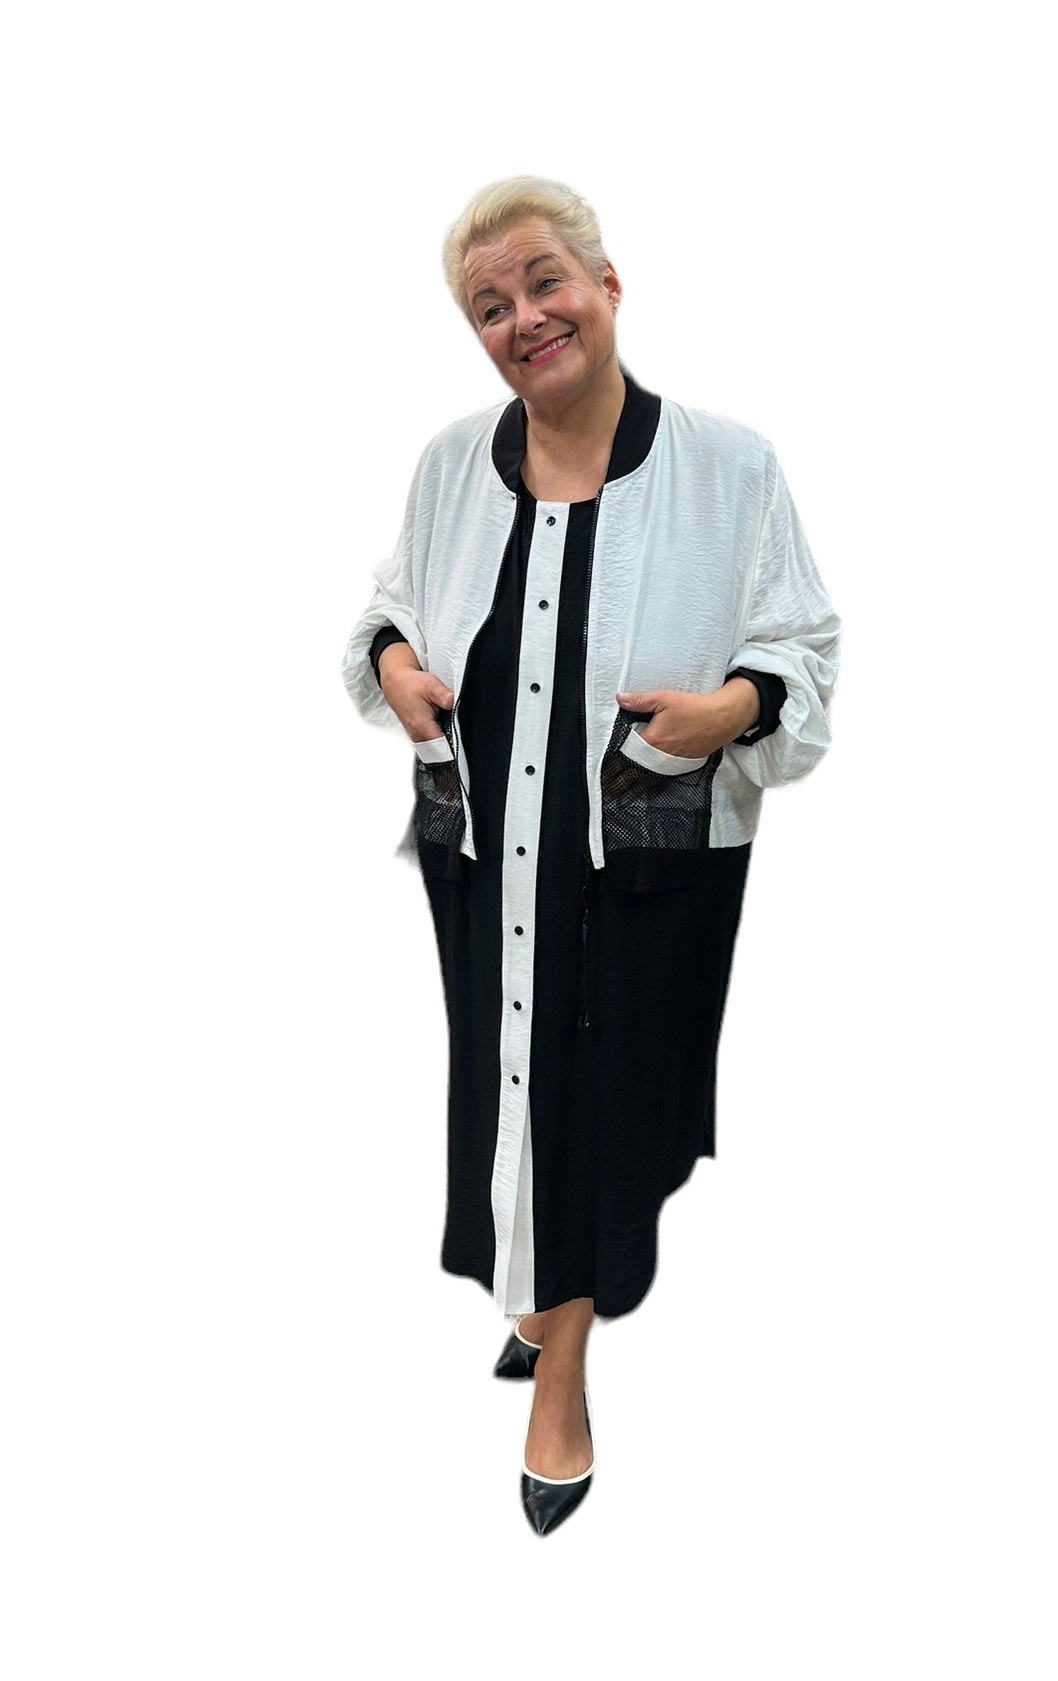 La Velina Kleid mit Überwurf Jacke Netz Knöpfe schwarz weiß Gr 1 - 3